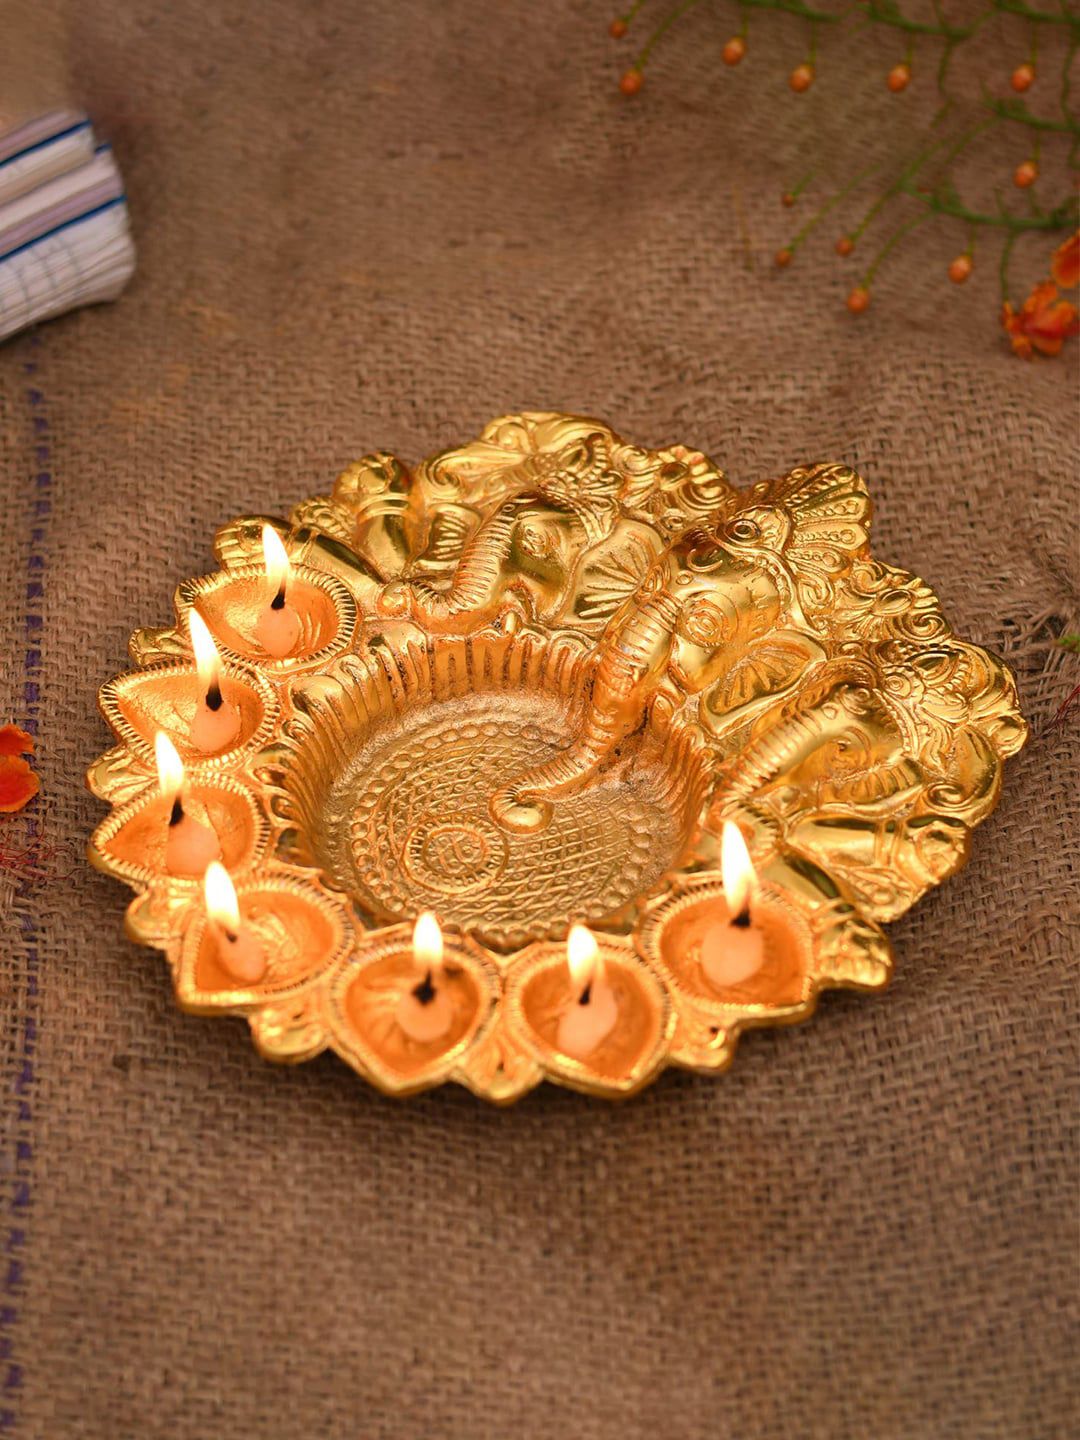 Craftvatika Gold-Toned Metal Lord Ganesha Design Kuber Diya Price in India